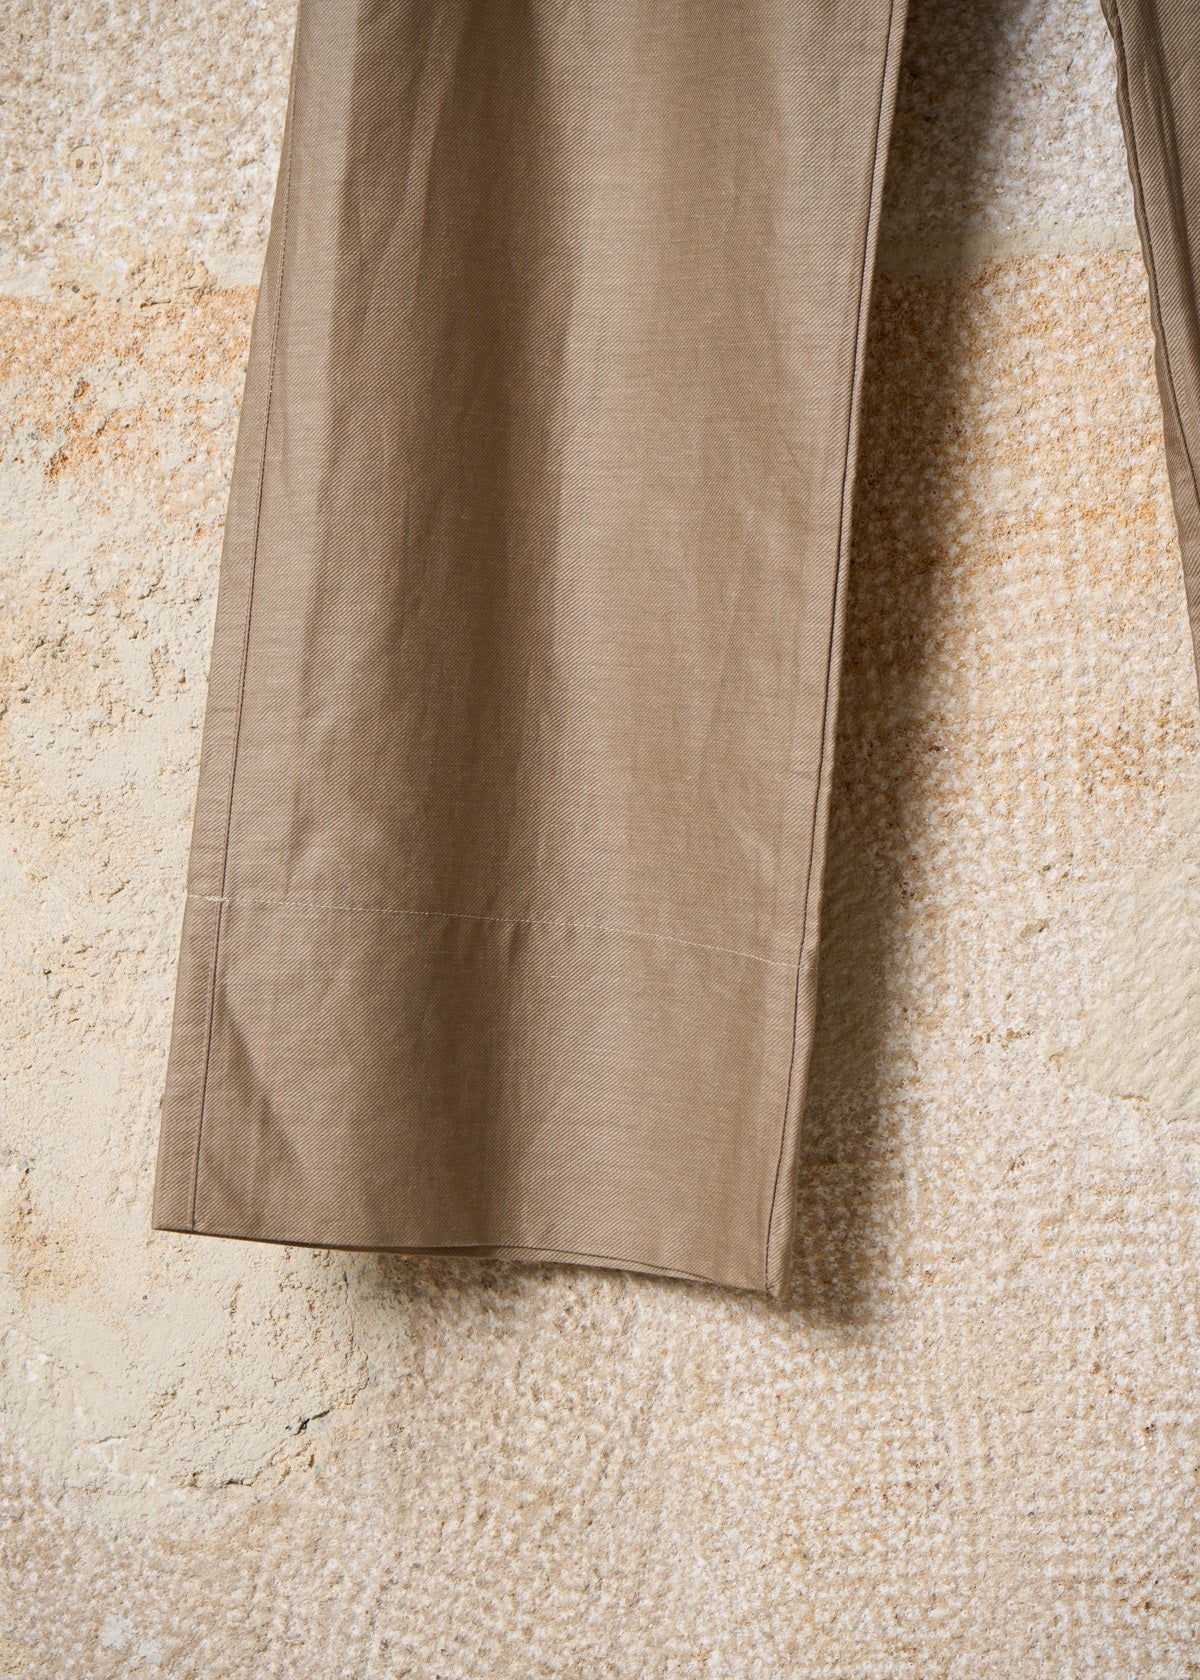 Beige Coated Linen Cotton Wide Pants 2000's - 48IT